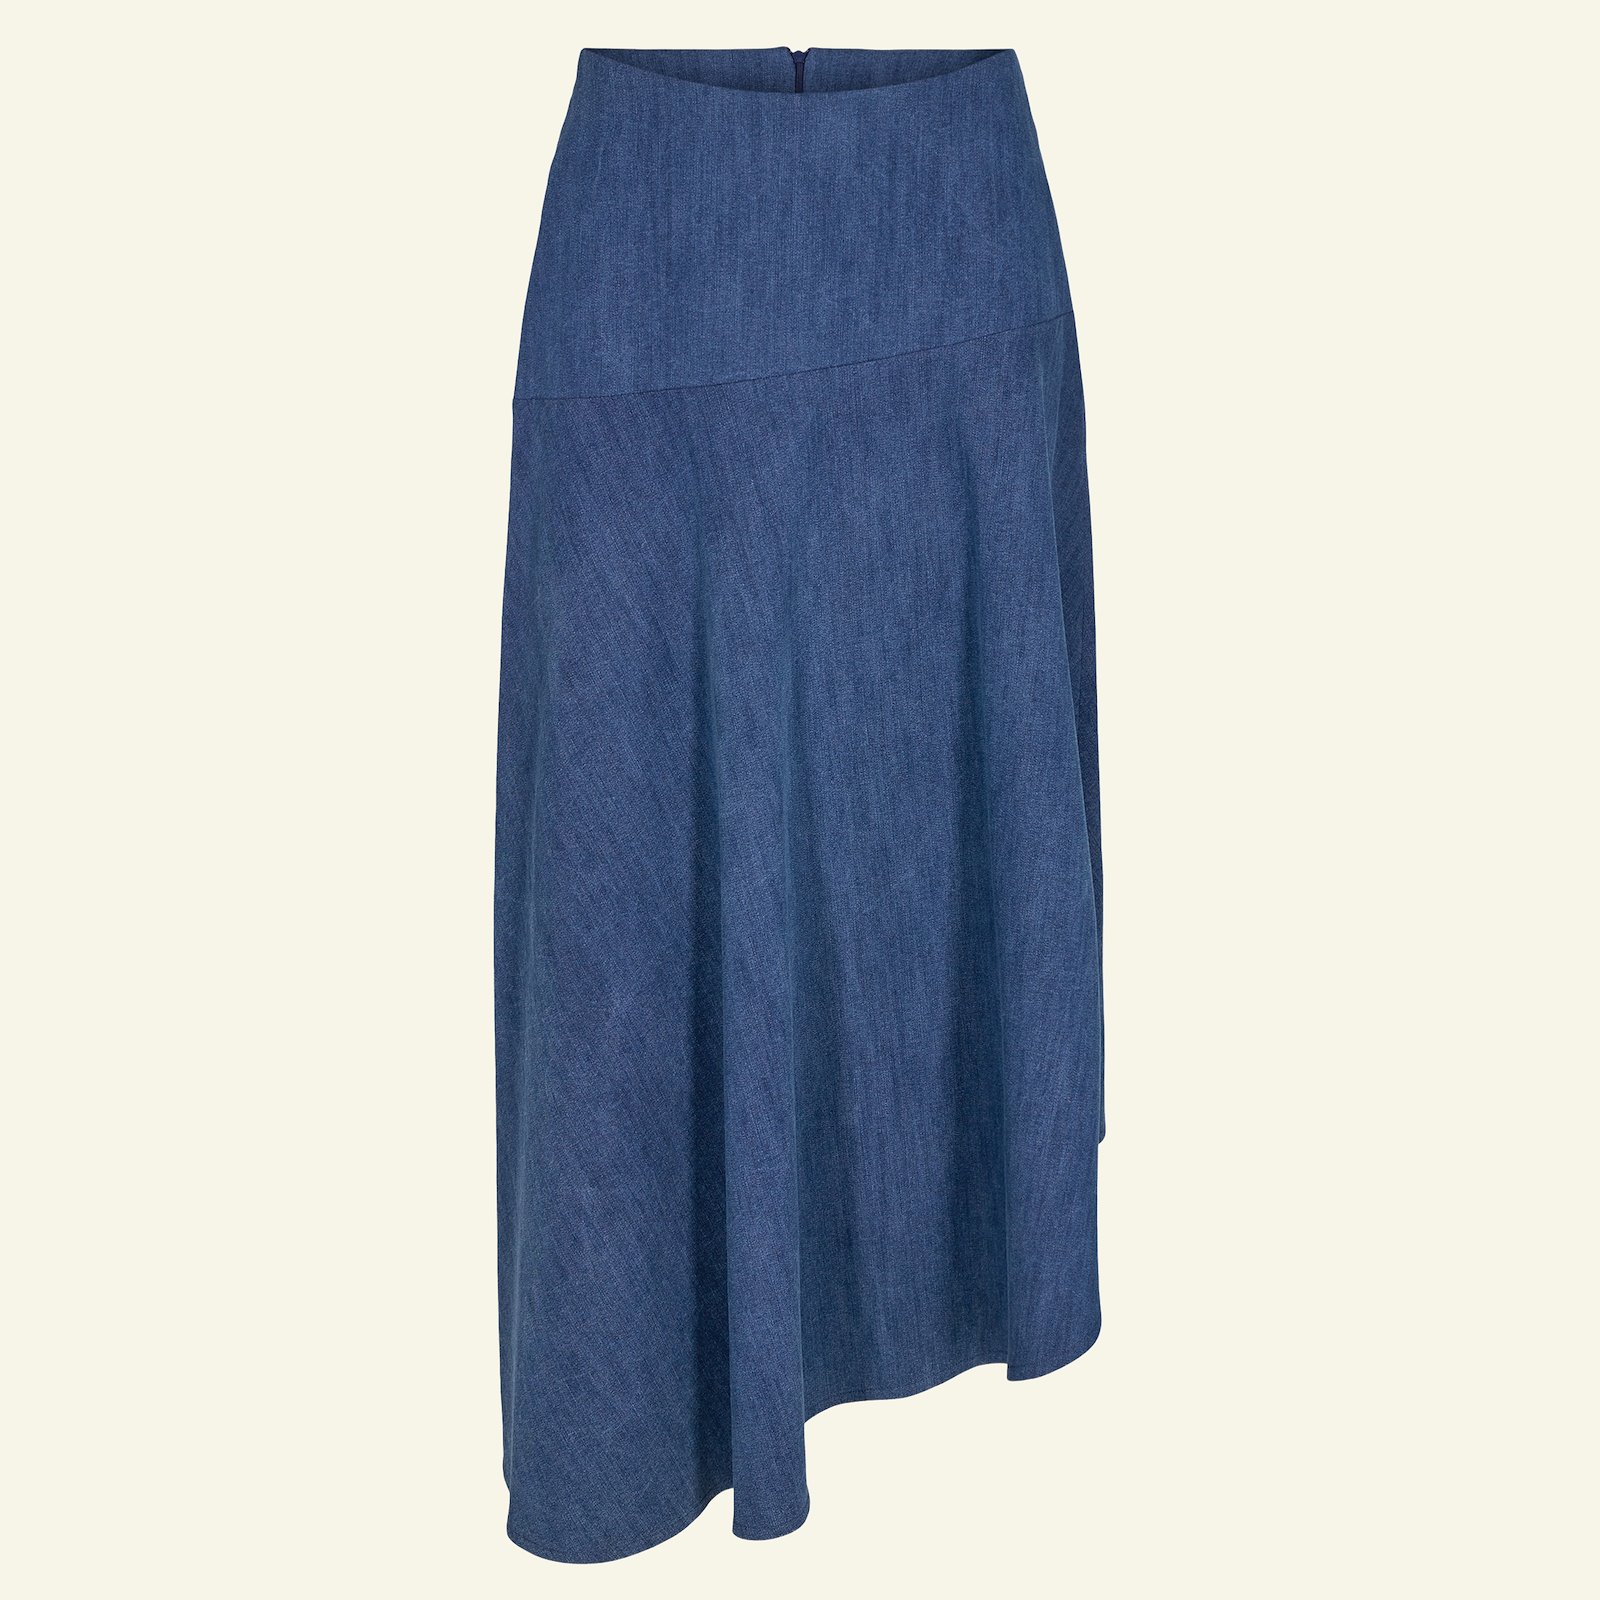 Asymmetric skirt, 34/6 p21041_460851_sskit